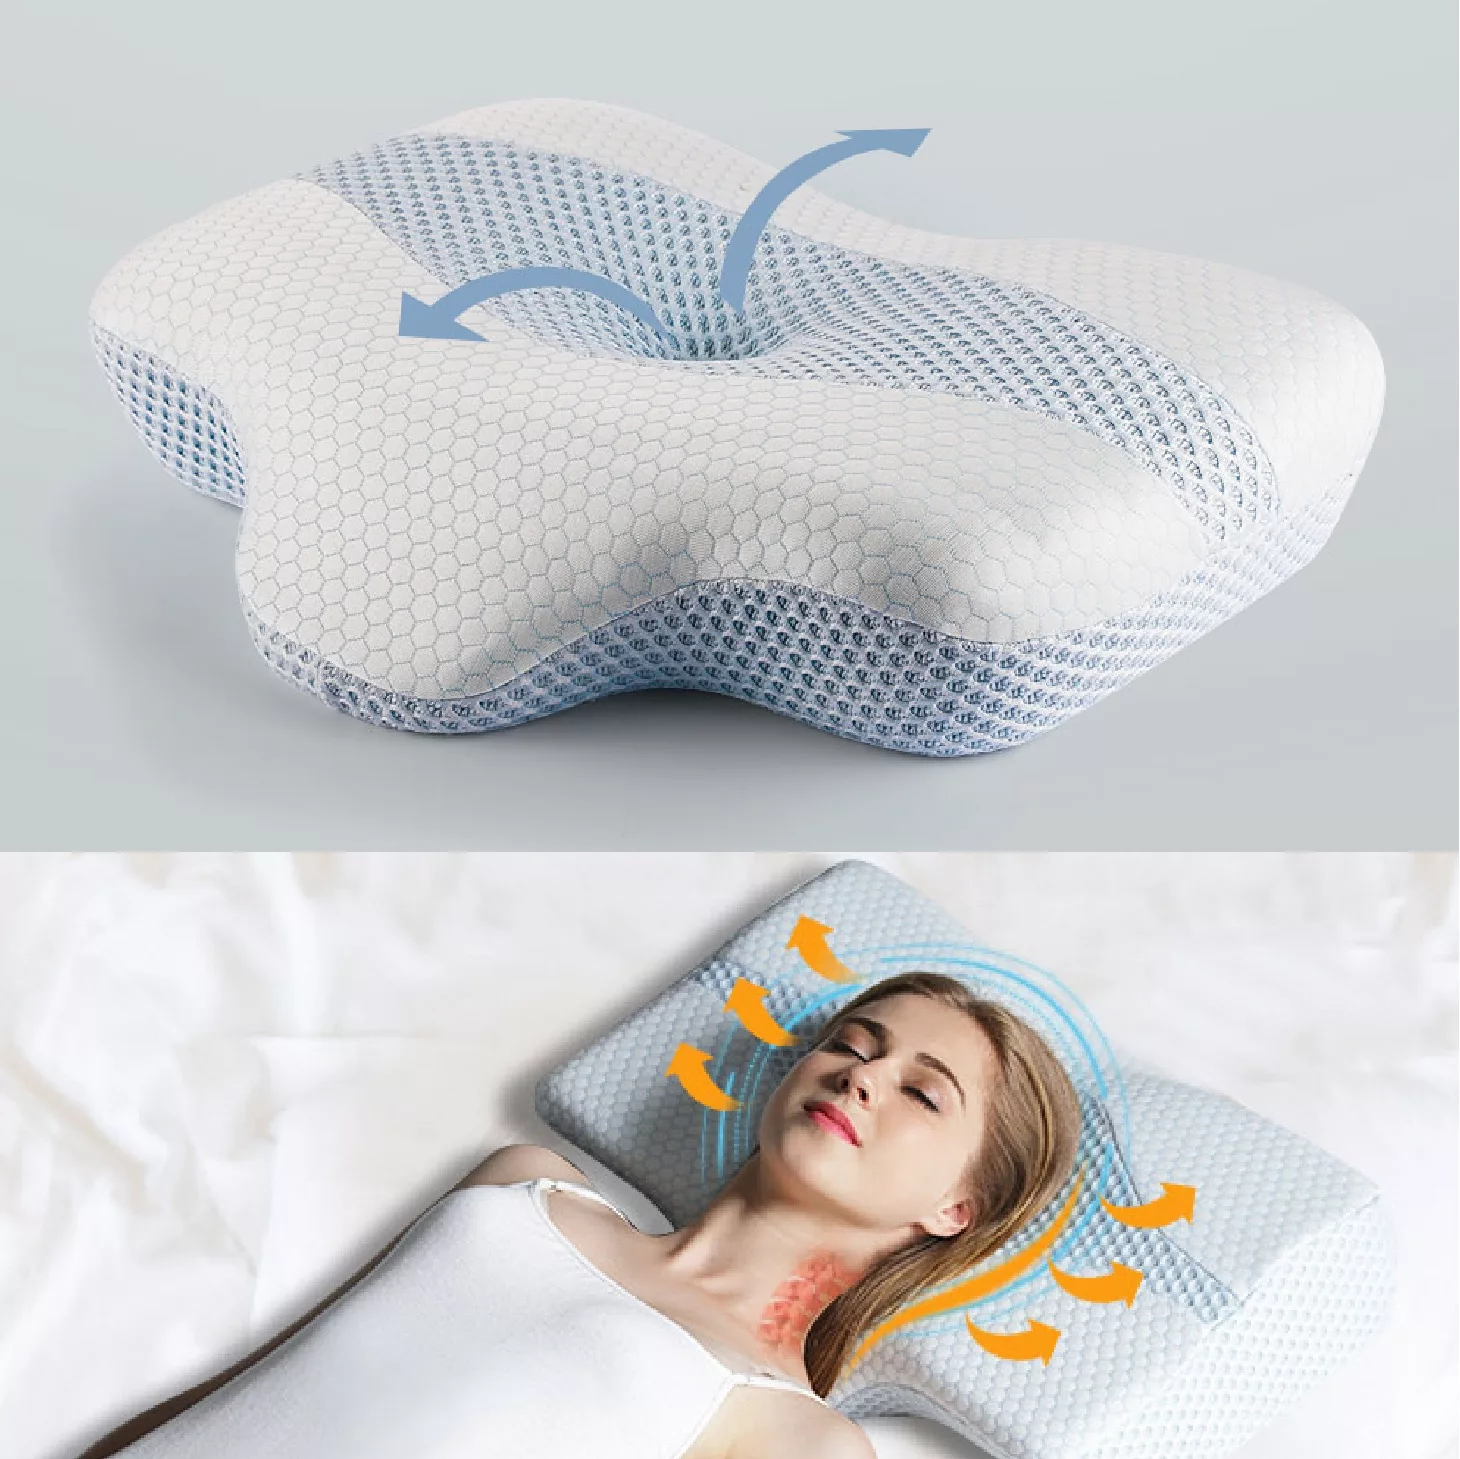  Mkicesky Side Sleeper Contour Memory Foam Pillow